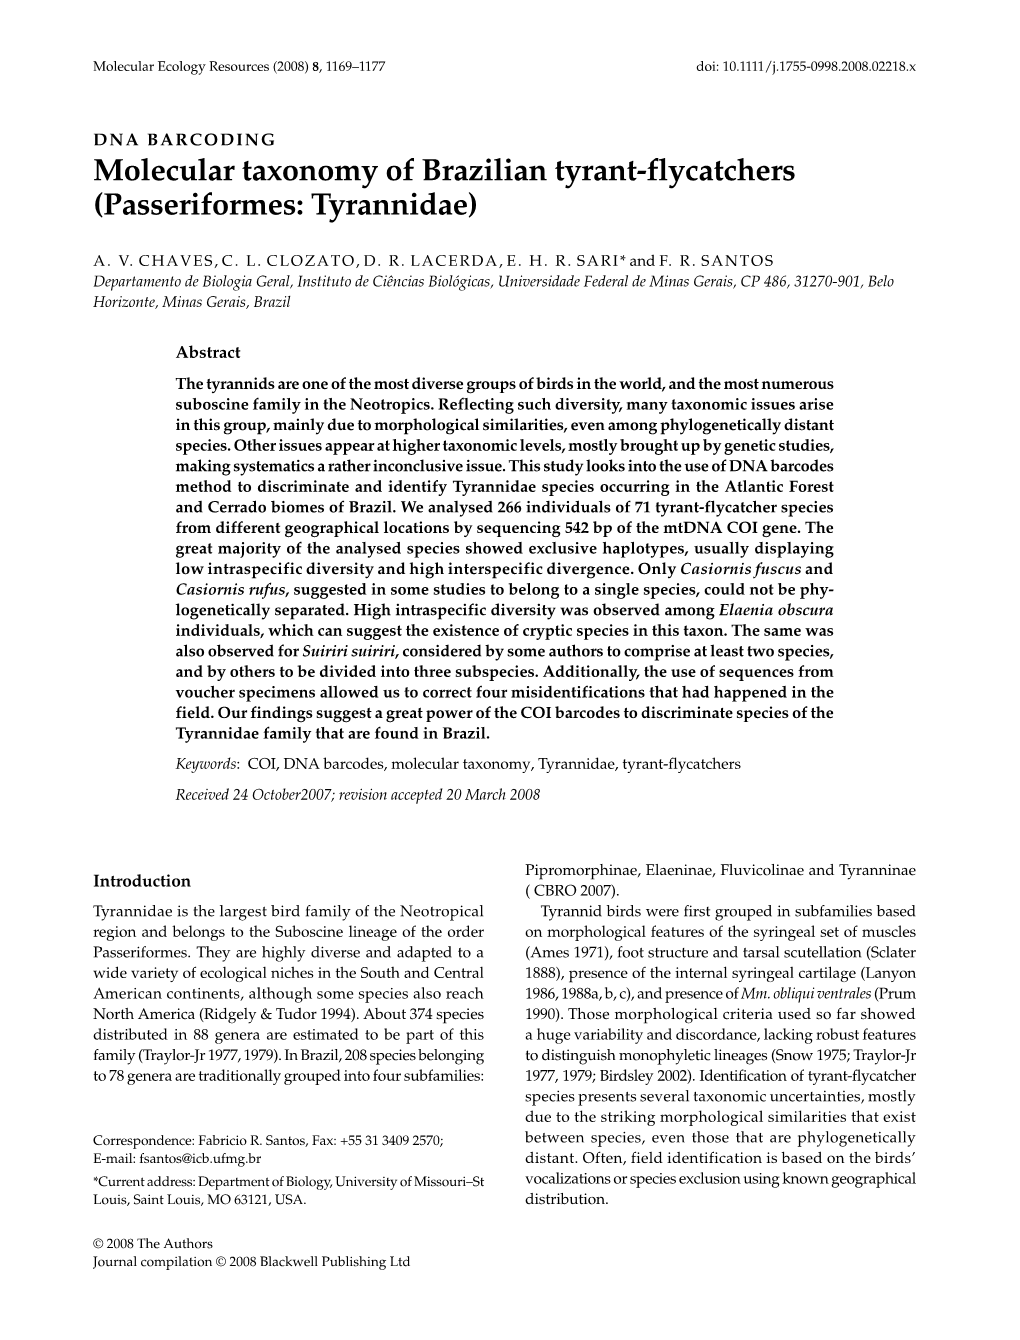 Molecular Taxonomy of Brazilian Tyrant-Flycatchers (Passeriformes: Tyrannidae)